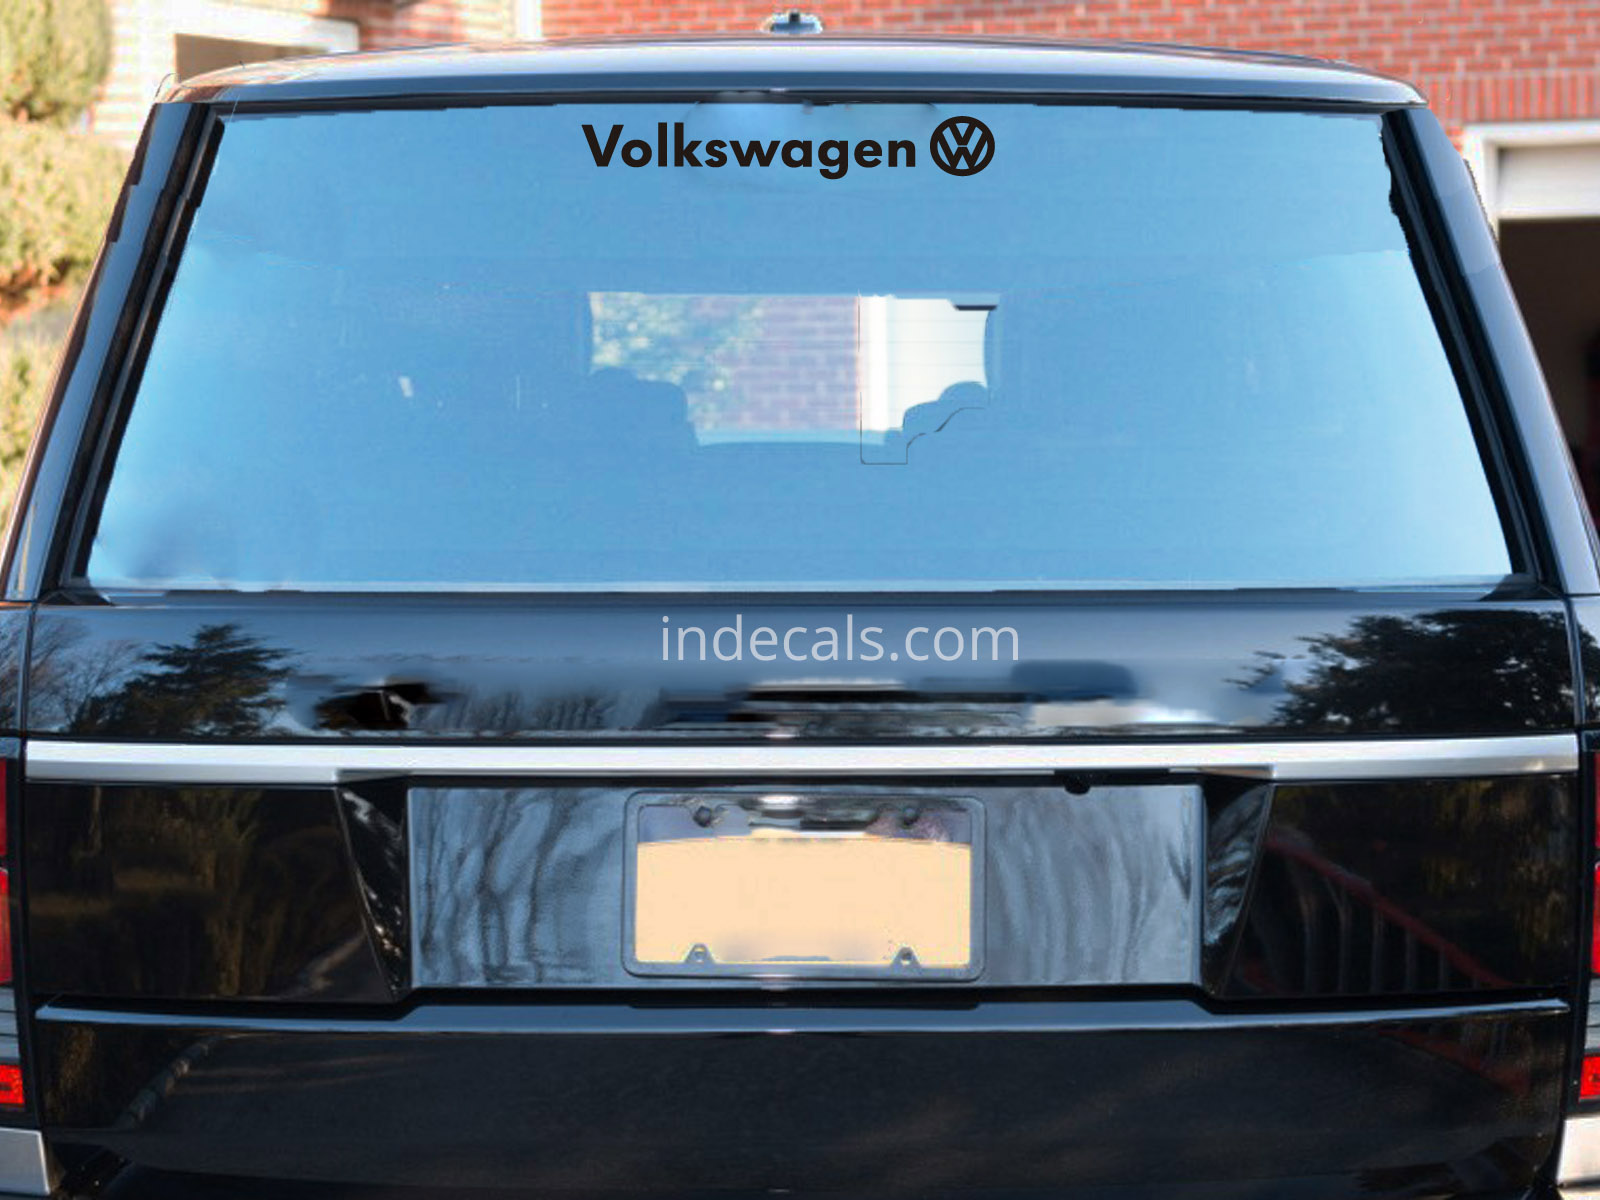 1 x Volkswagen Sticker for Windshield or Back Window - Black